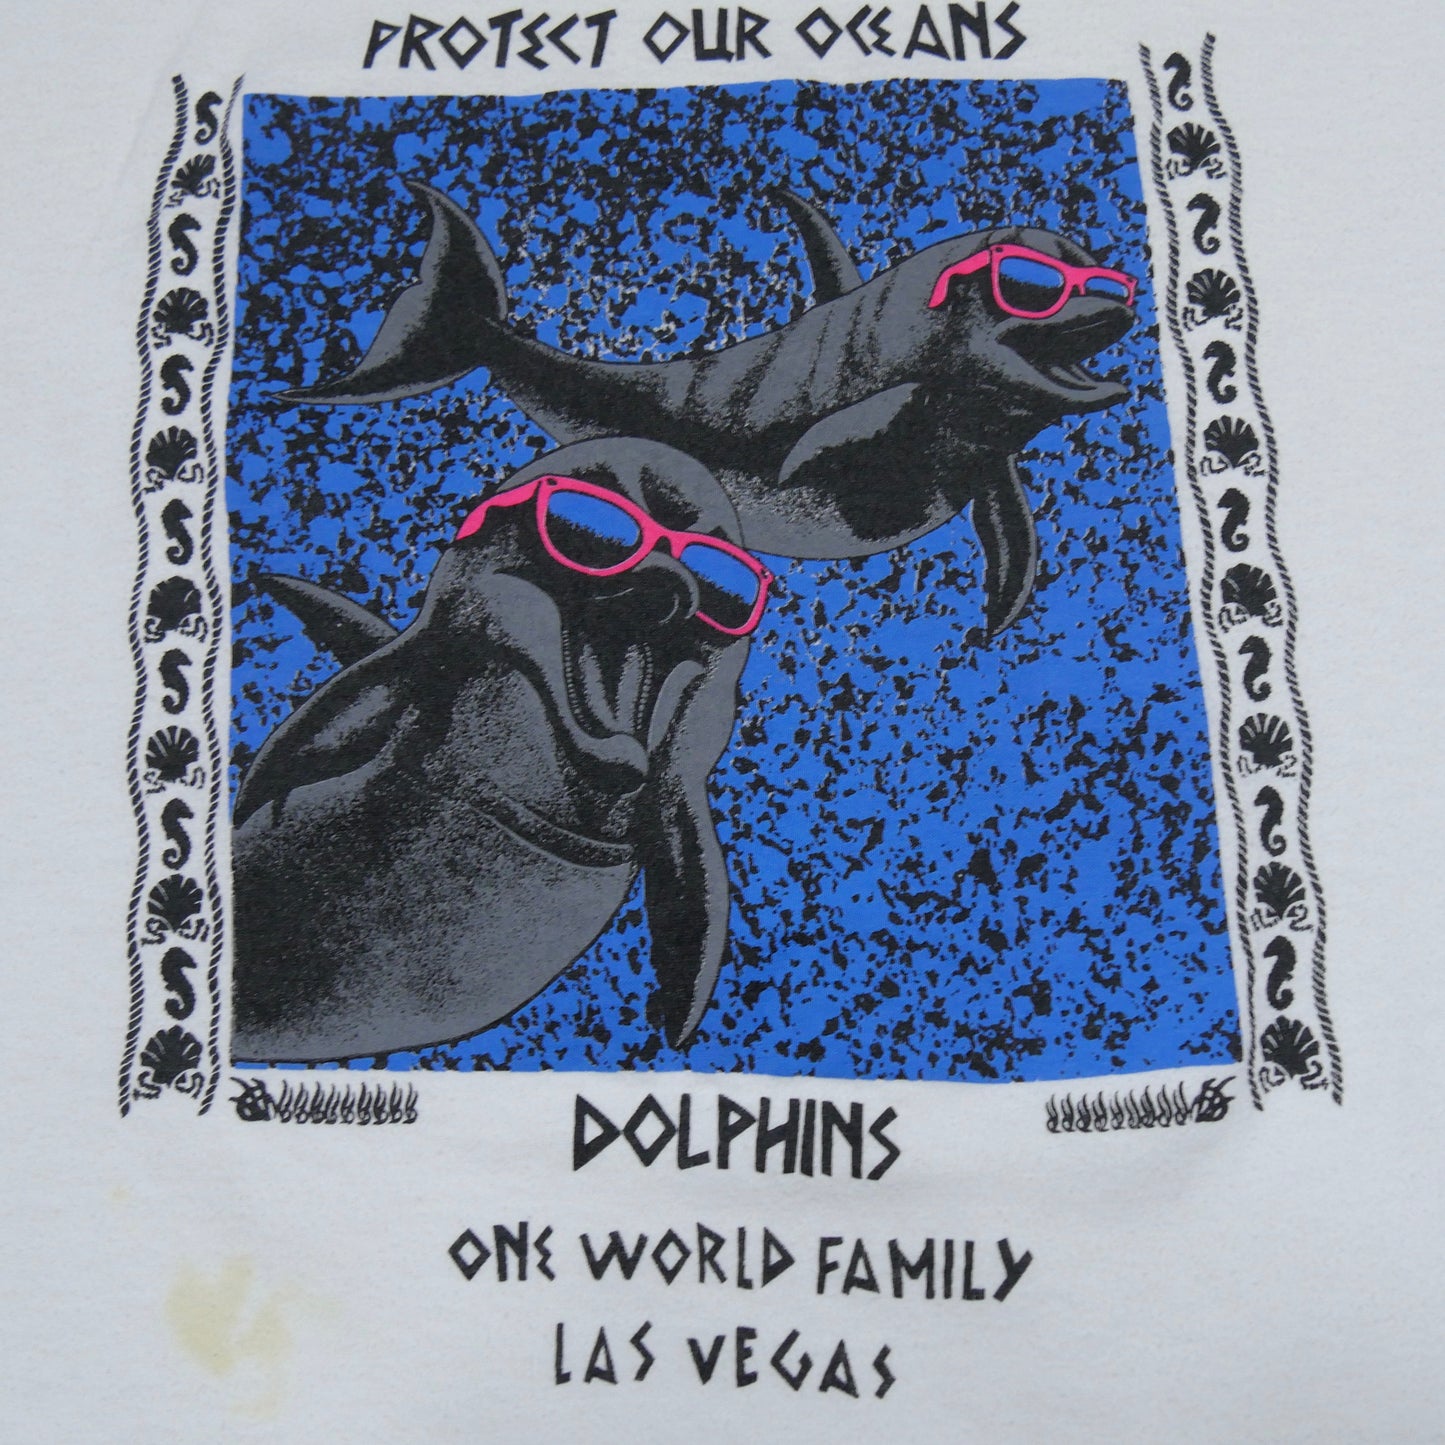 Protect Our Oceans Dolphins Sunglasses Las Vegas Shirt - Large